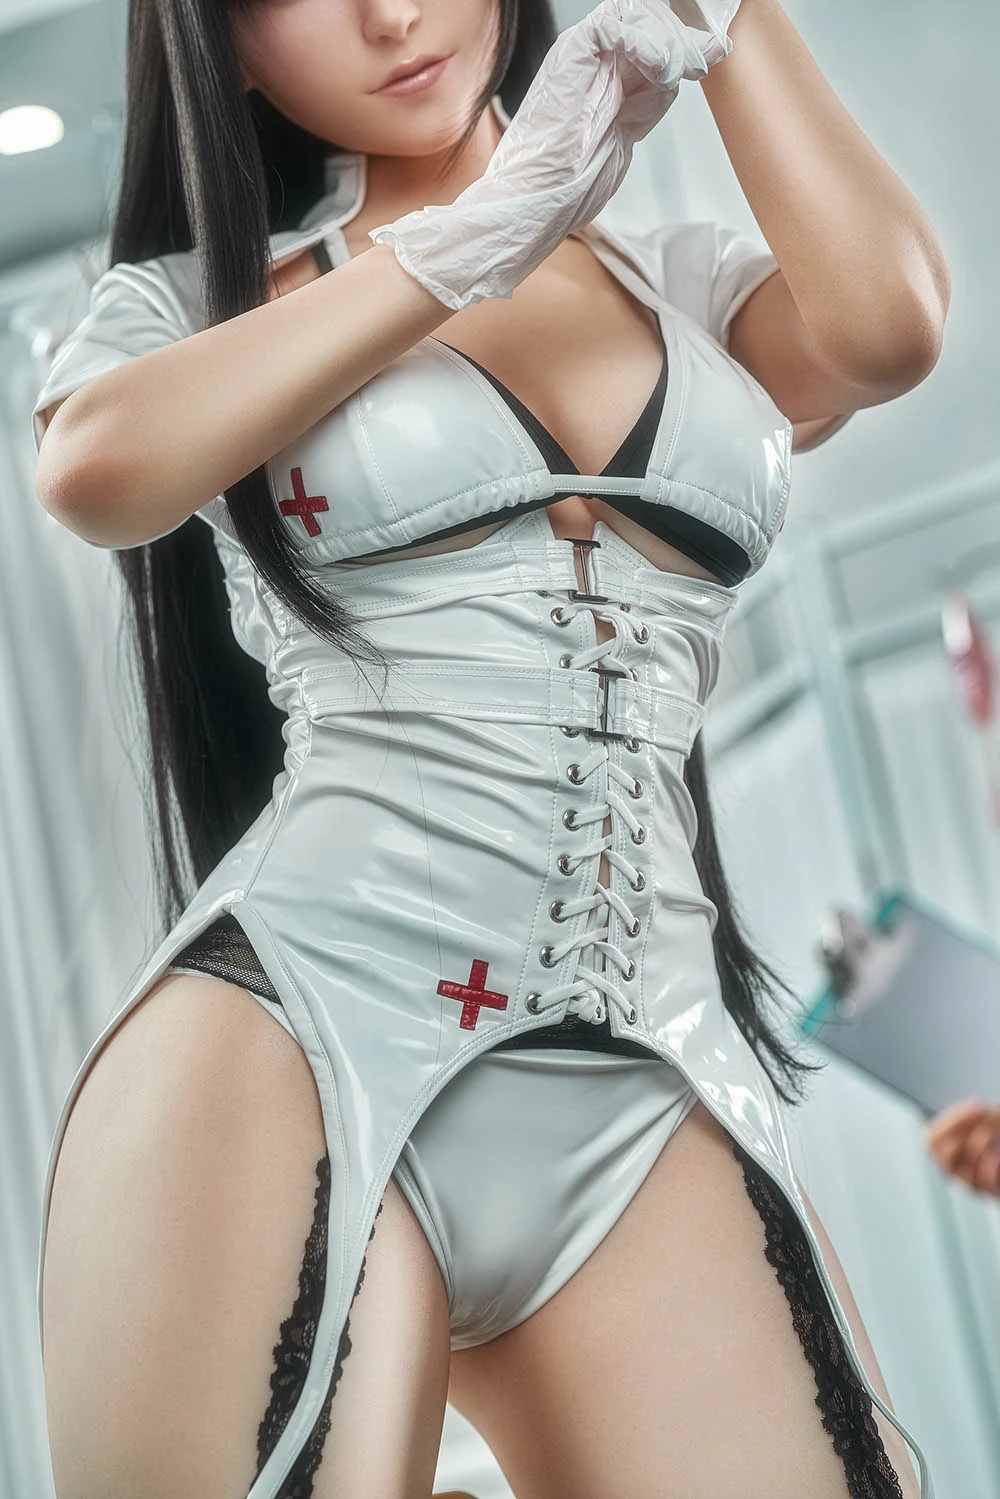  nurse cosplay sex doll